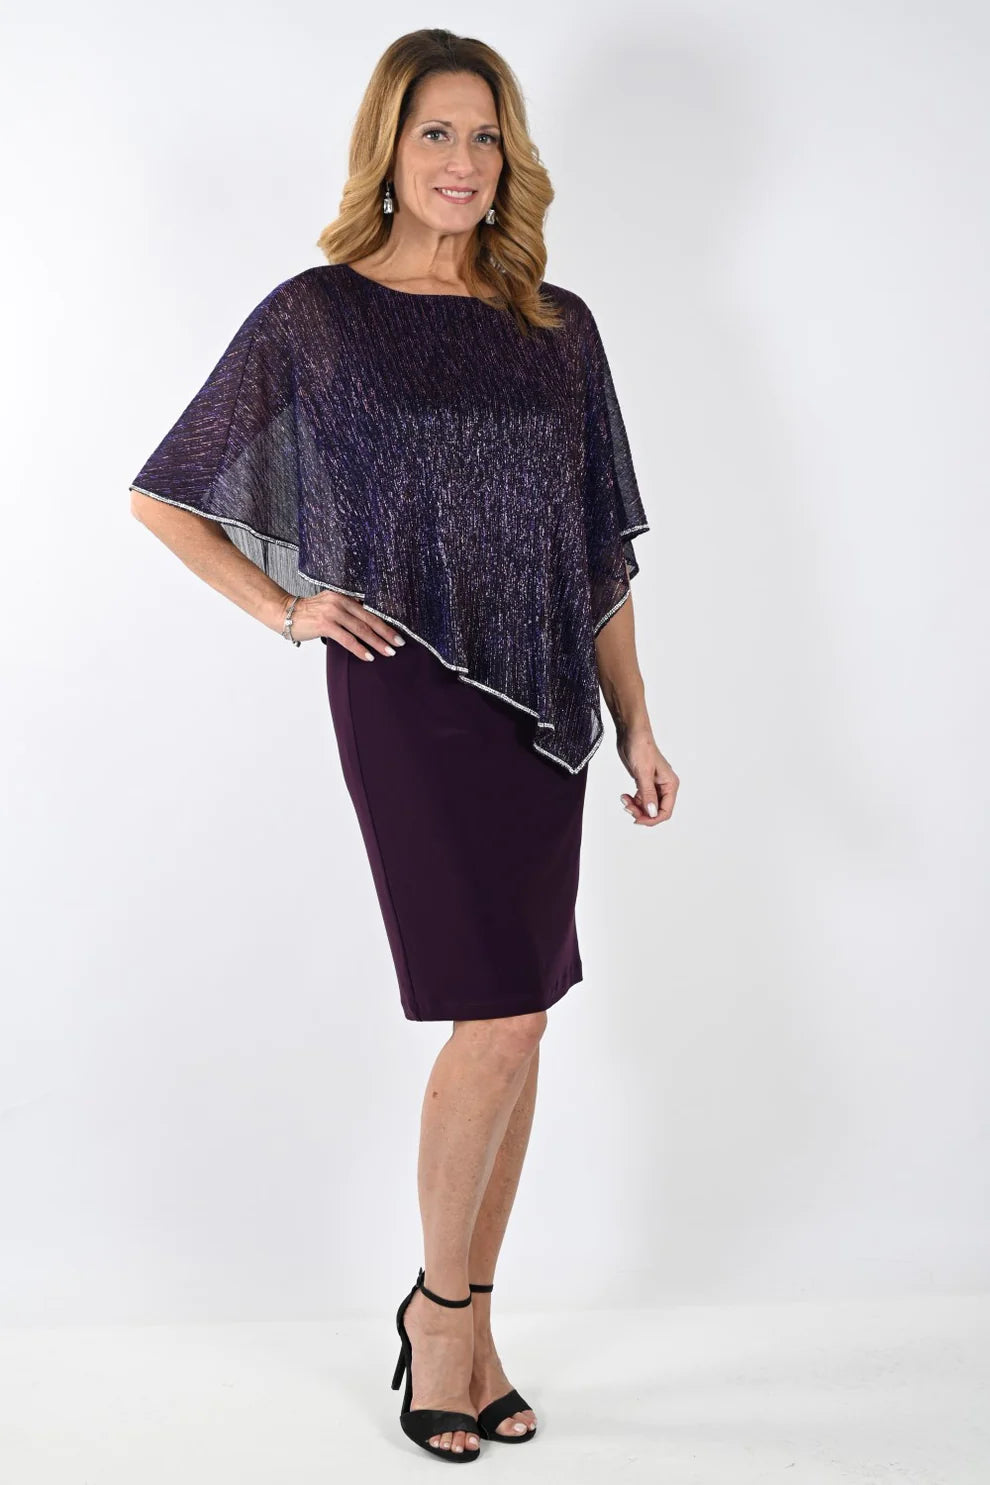 Frank Lyman - Metallic Overlay Dress Style - 239158 - Pink/Purple